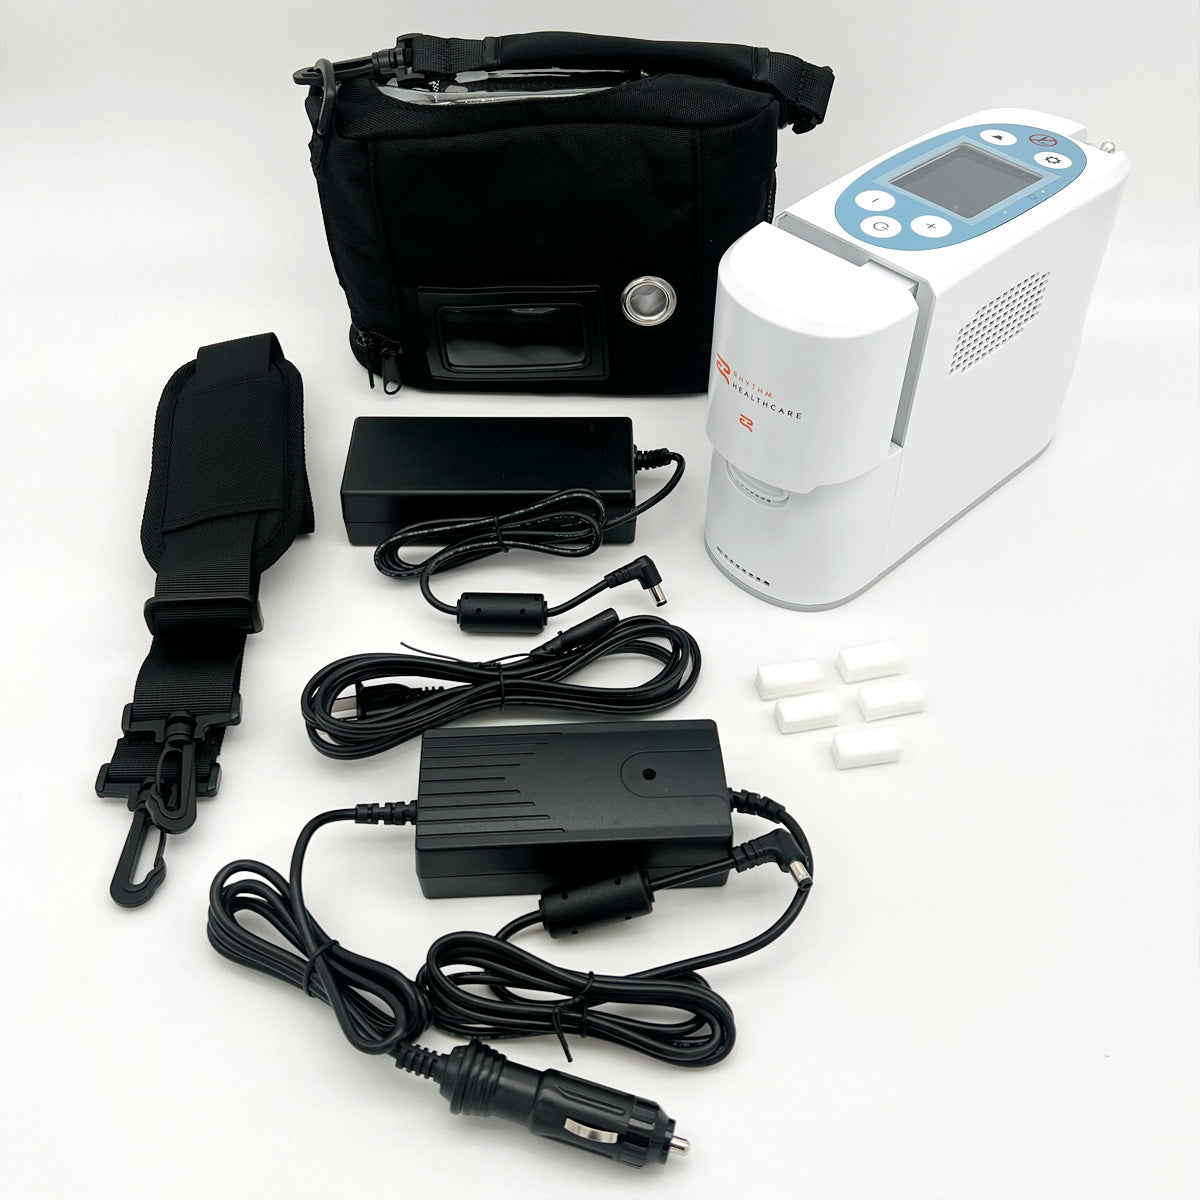 Rhythm P2-E6 Portable Oxygen Concentrator Package - Pulse Dose